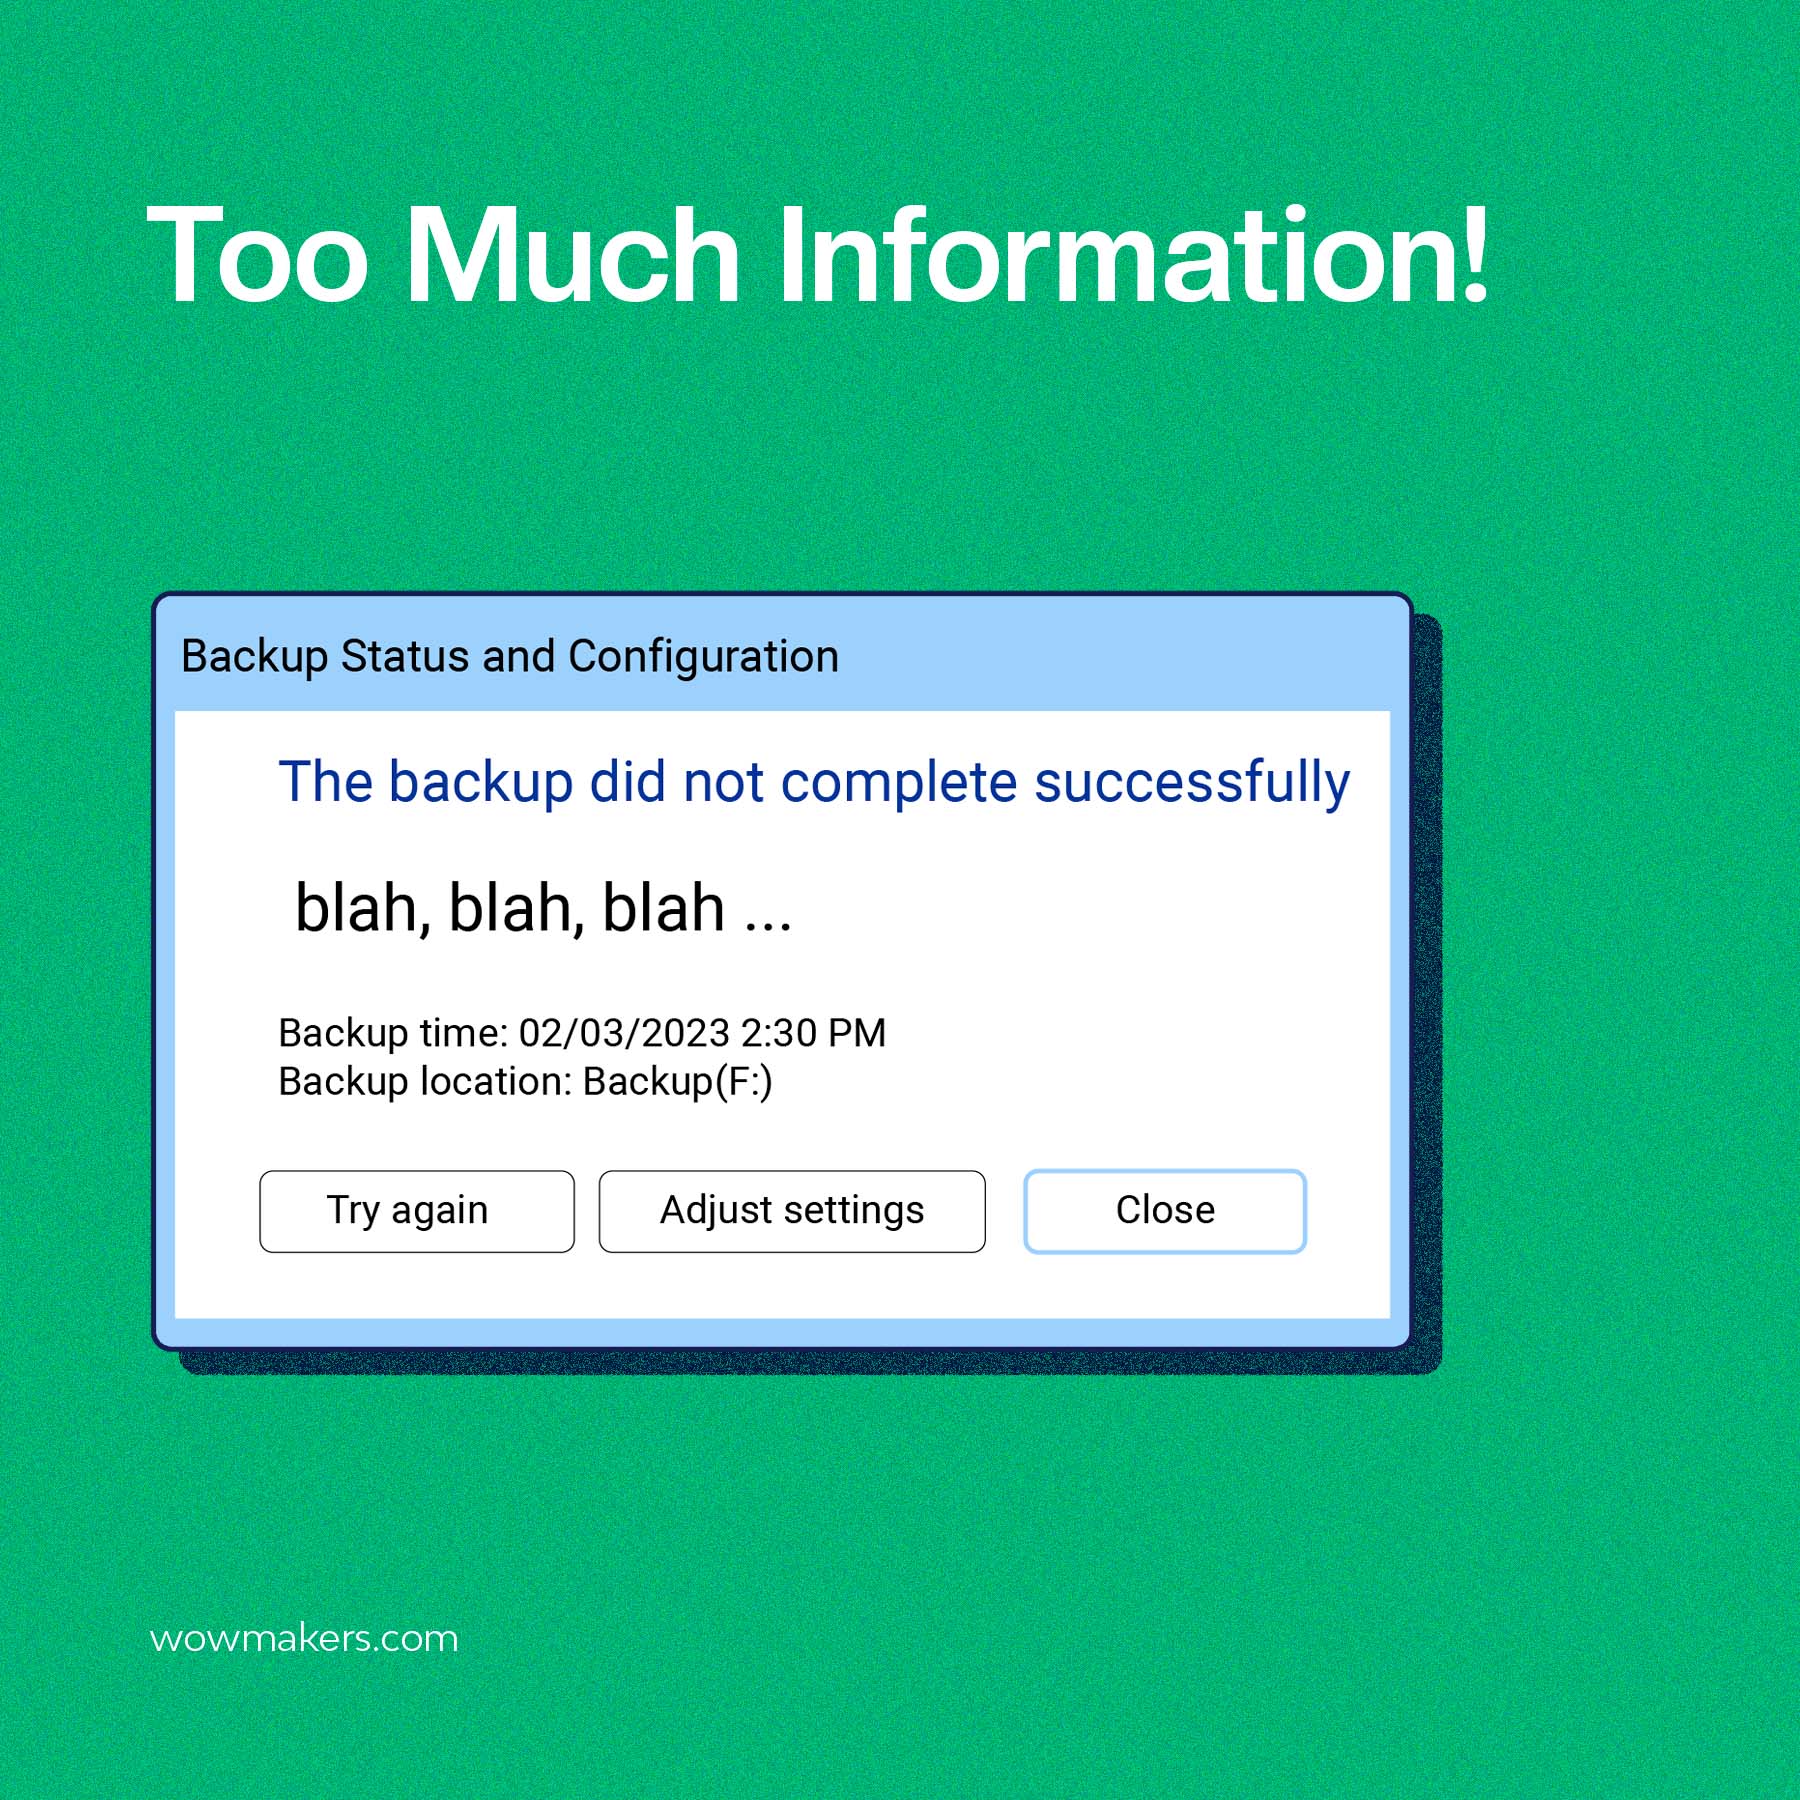 user friendly error messages - Too much info